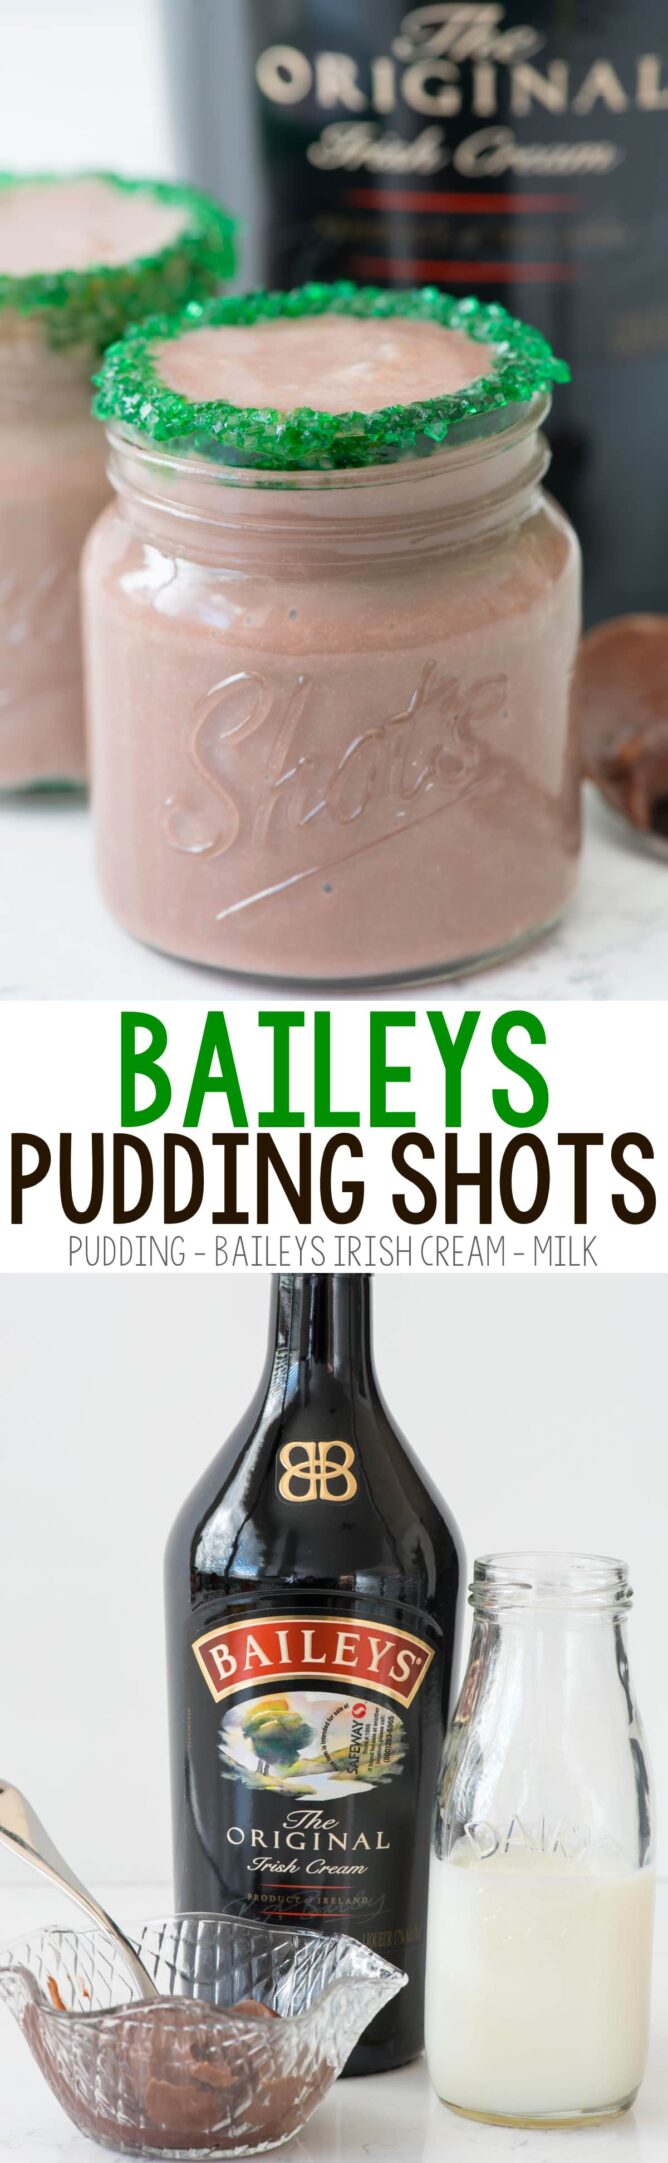 collage of baileys pudding shot photos